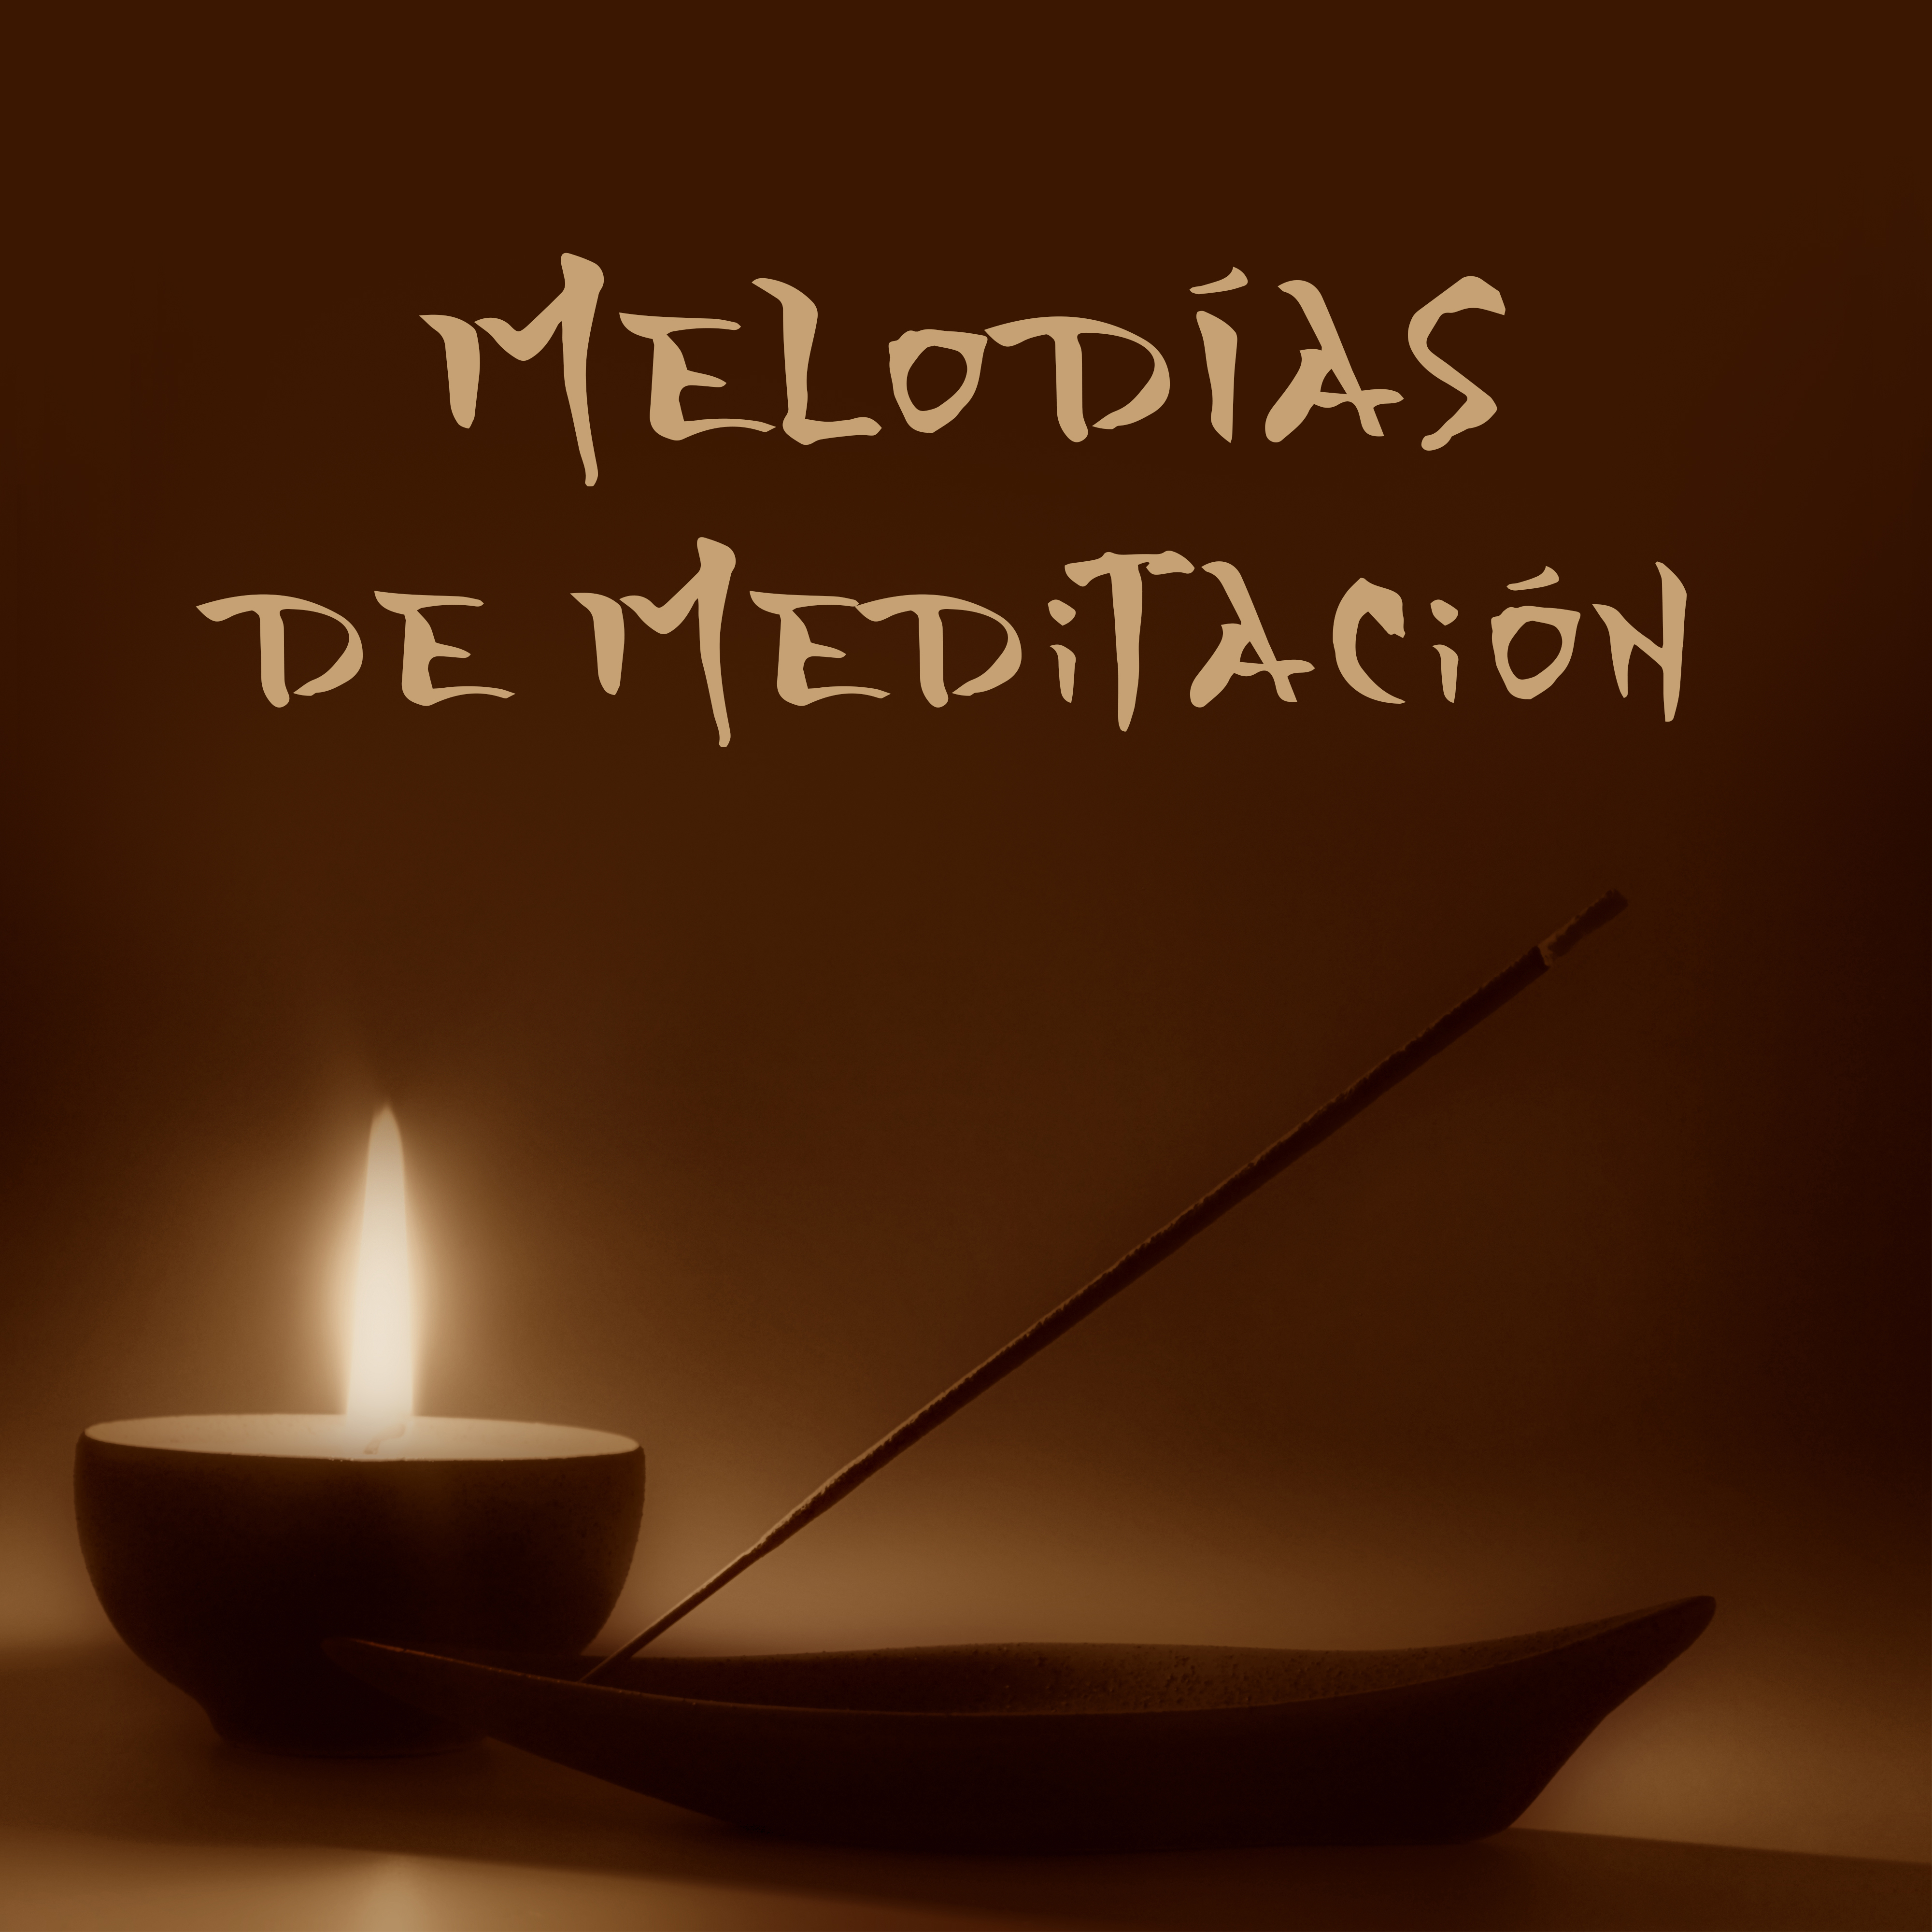 Melodías de Meditación